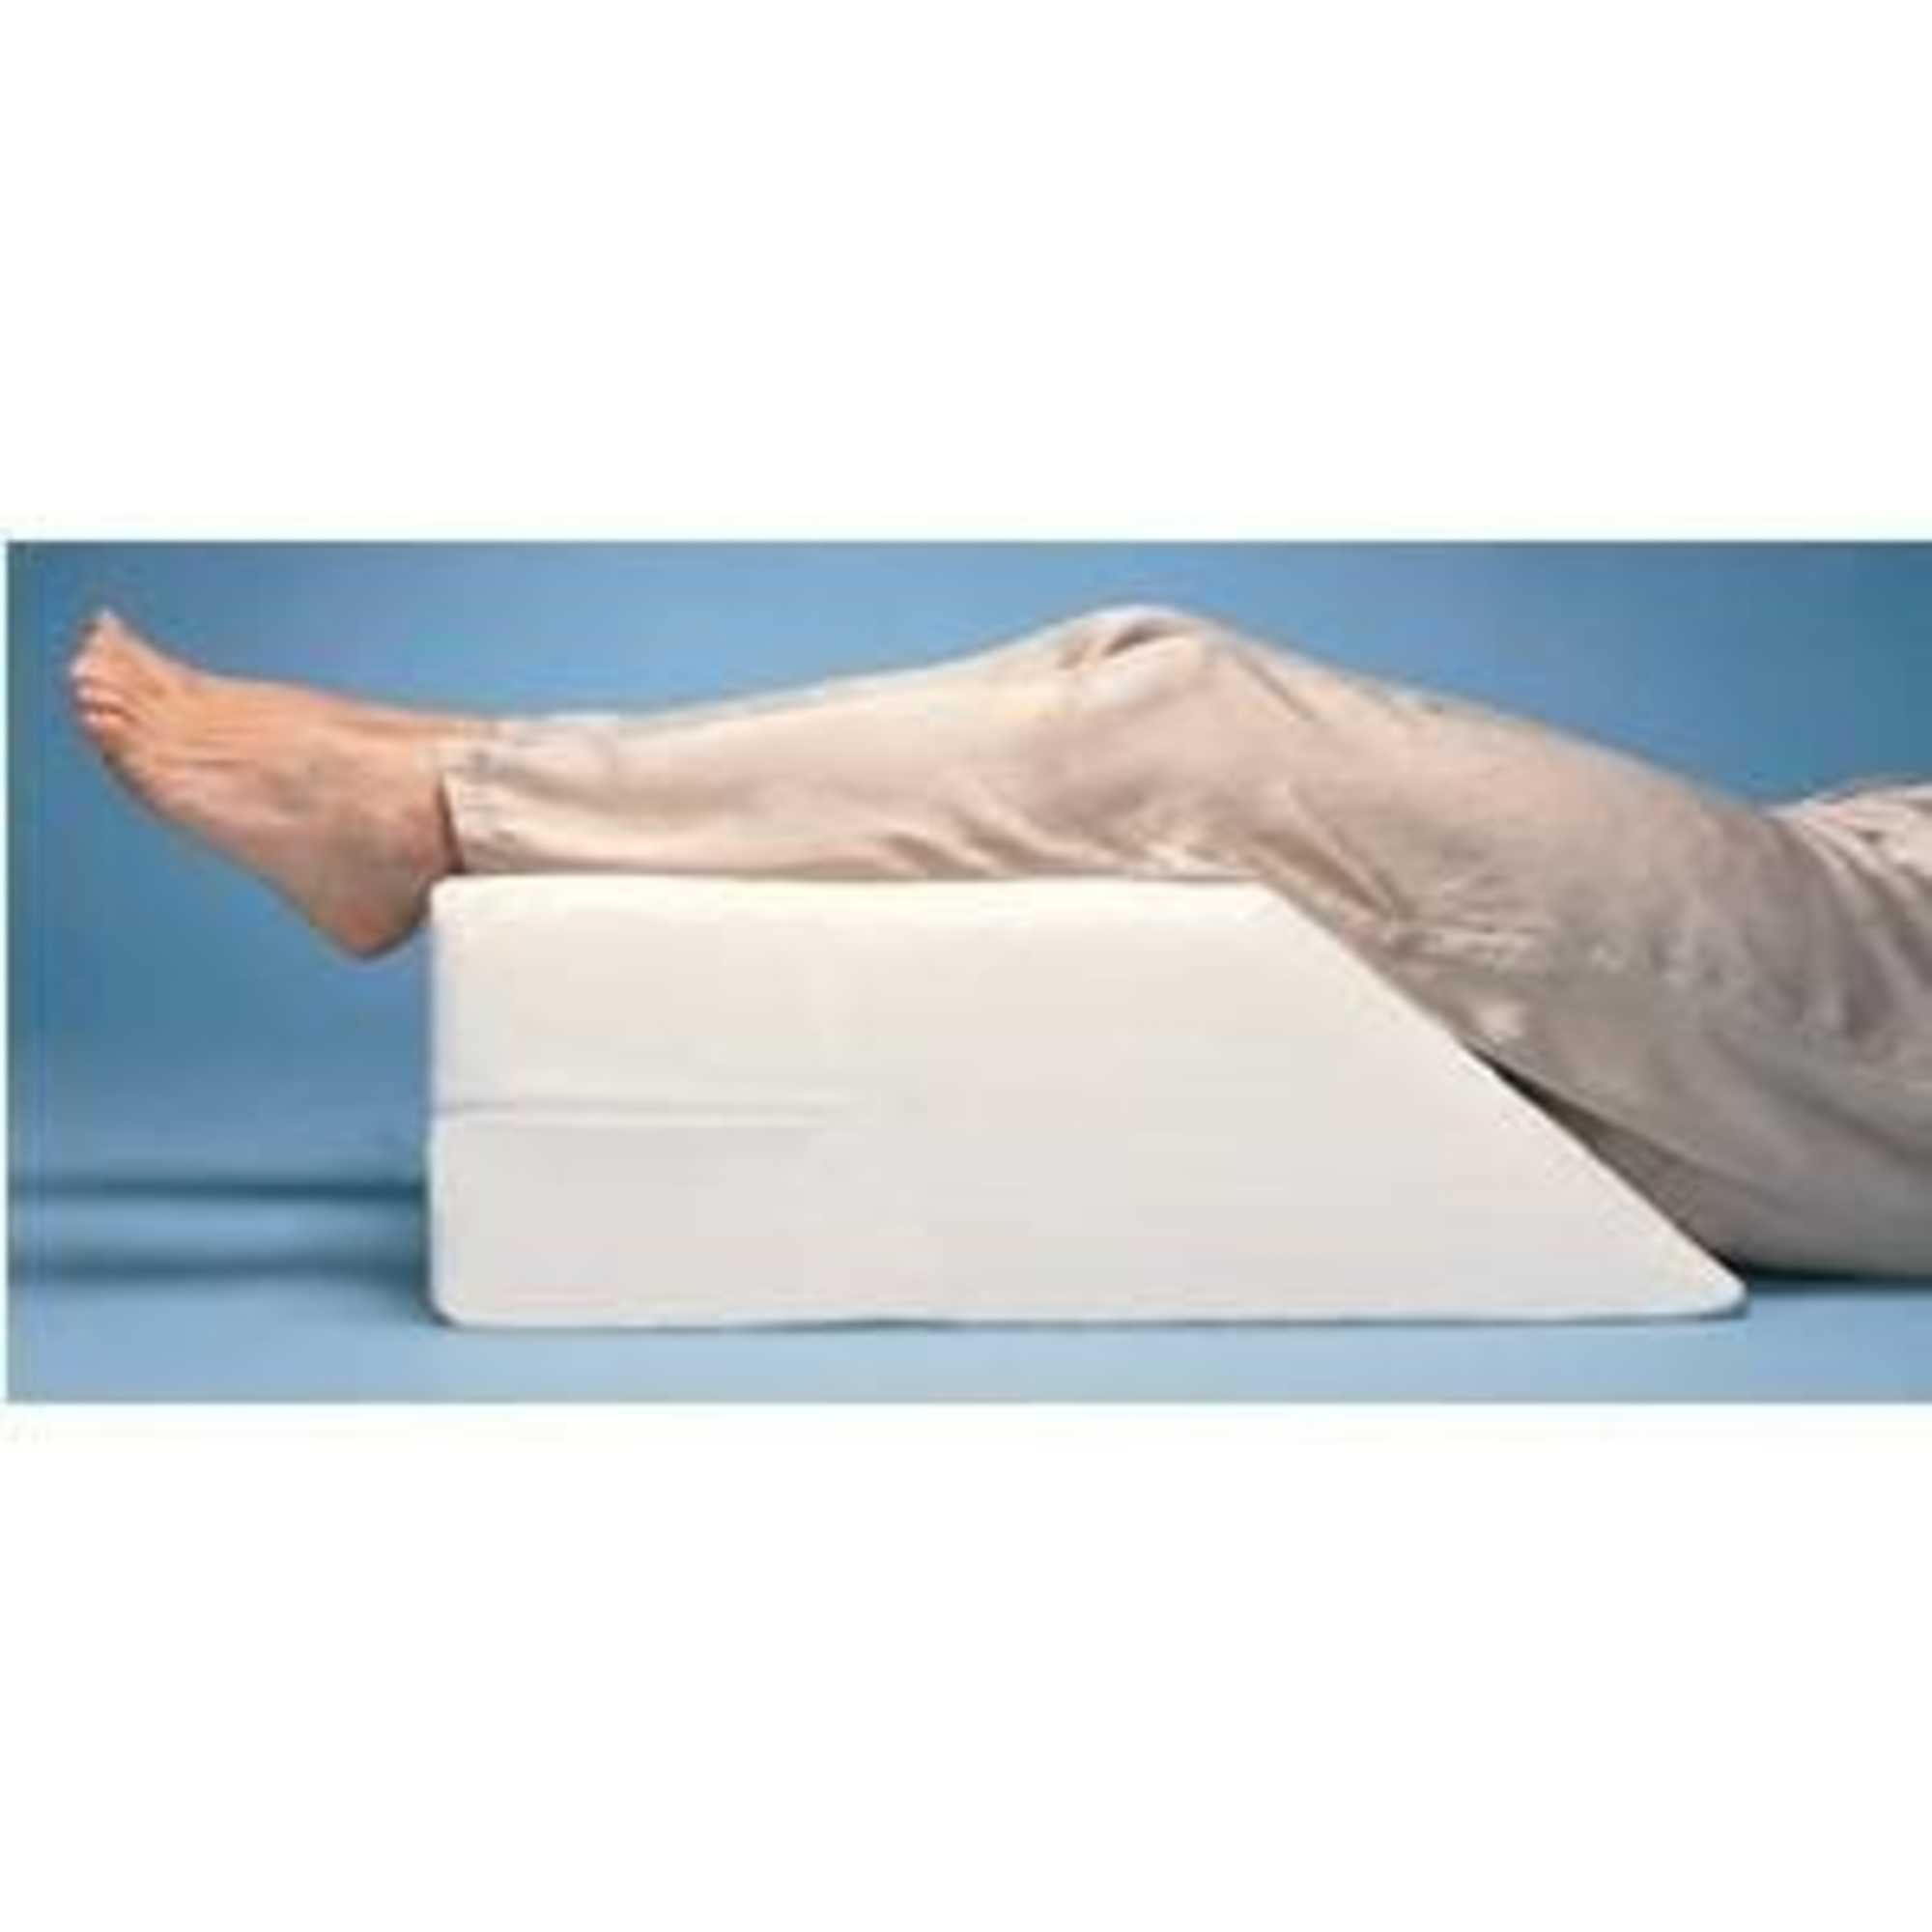 Wedge Leg Foot Rest Raiser Support Pillow Portable Inflatable R1J5 Cushion E3E9 